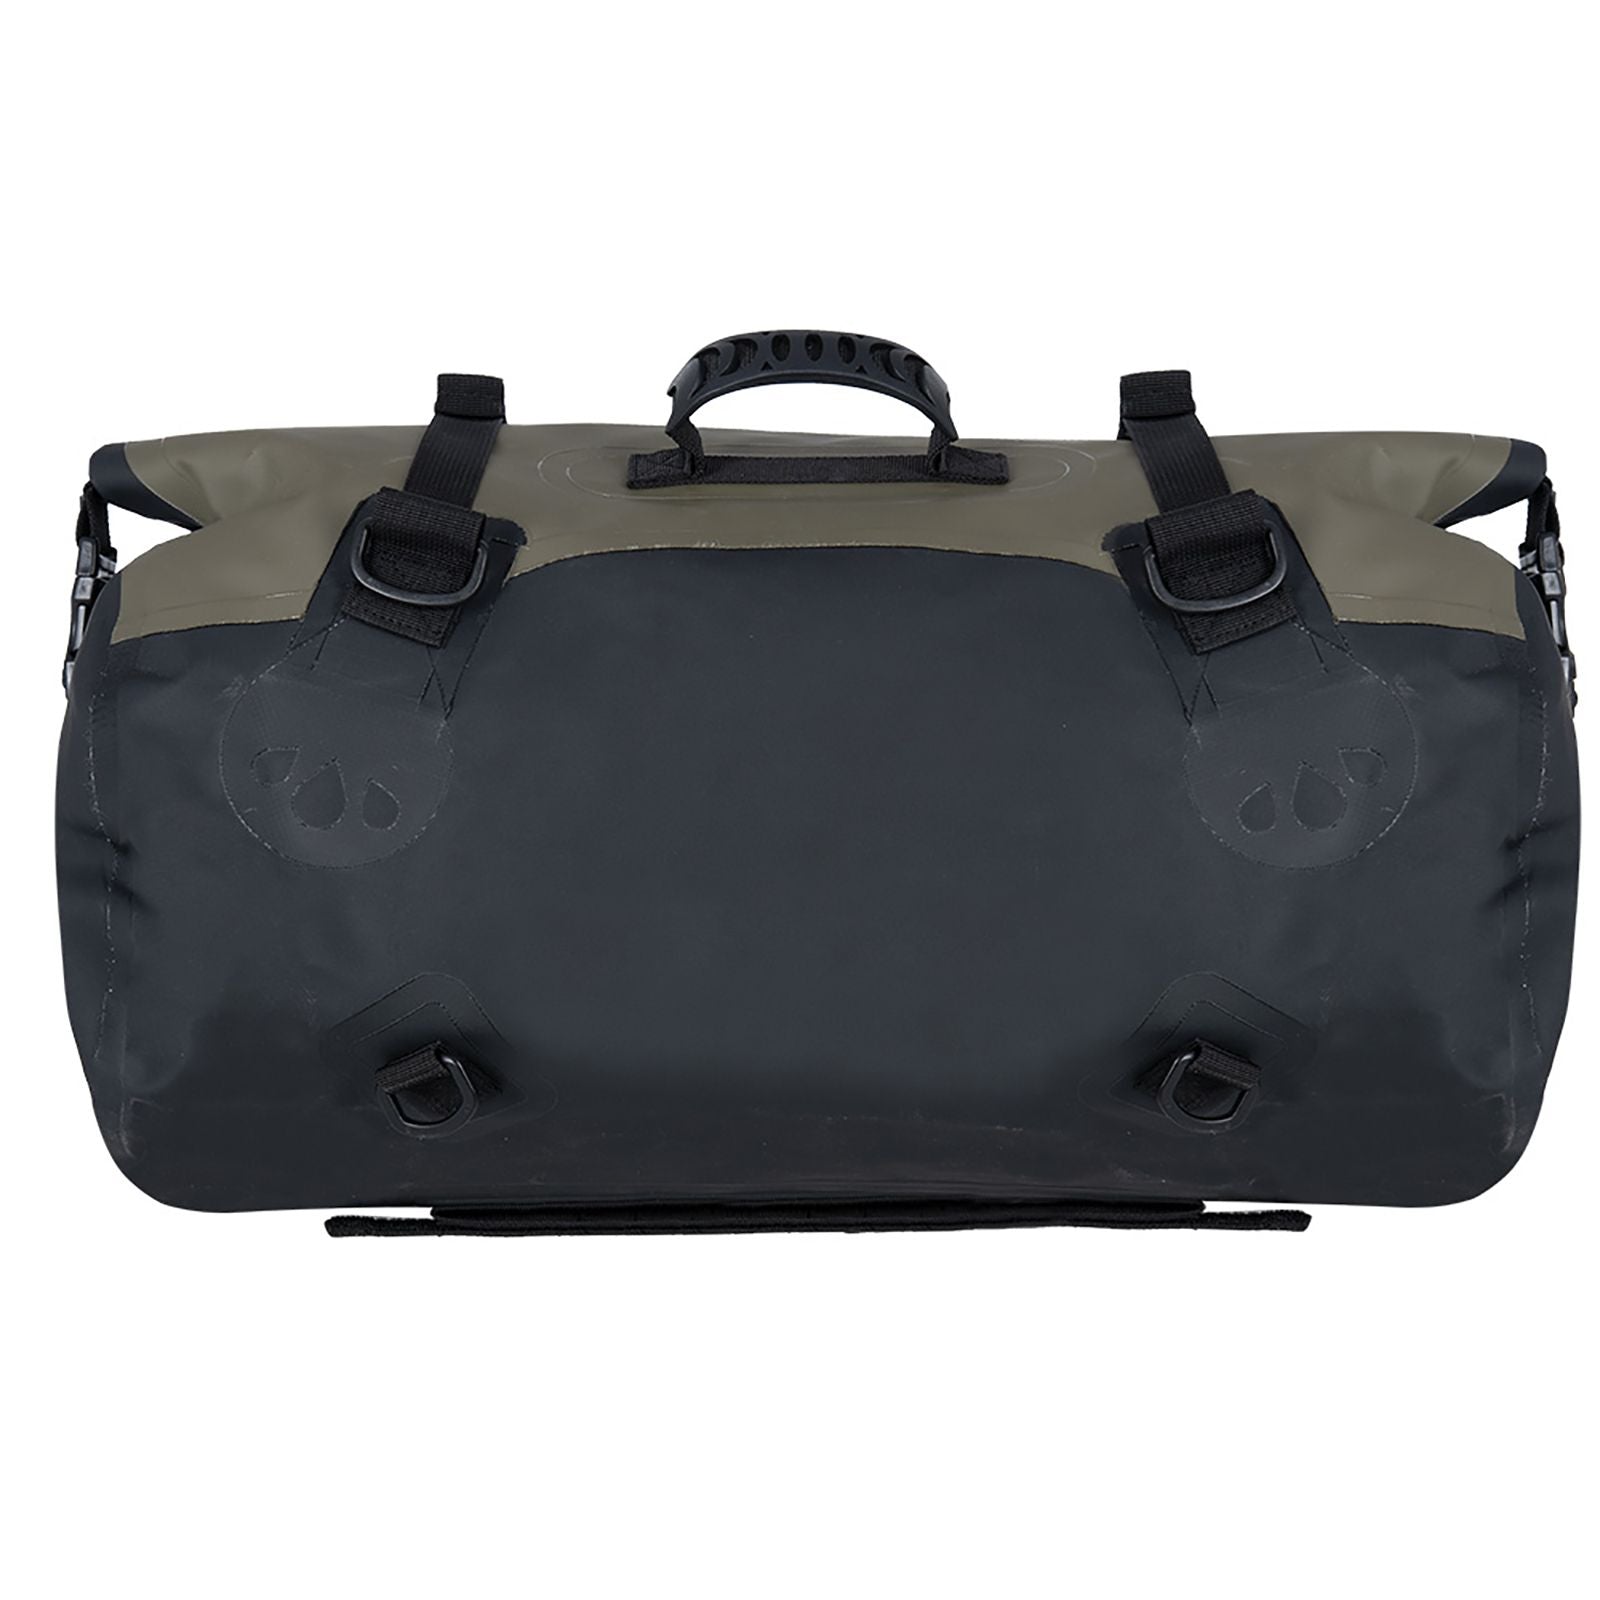 New OXFORD Aqua Roll Bag T30 - Black / Khaki #OXOL401